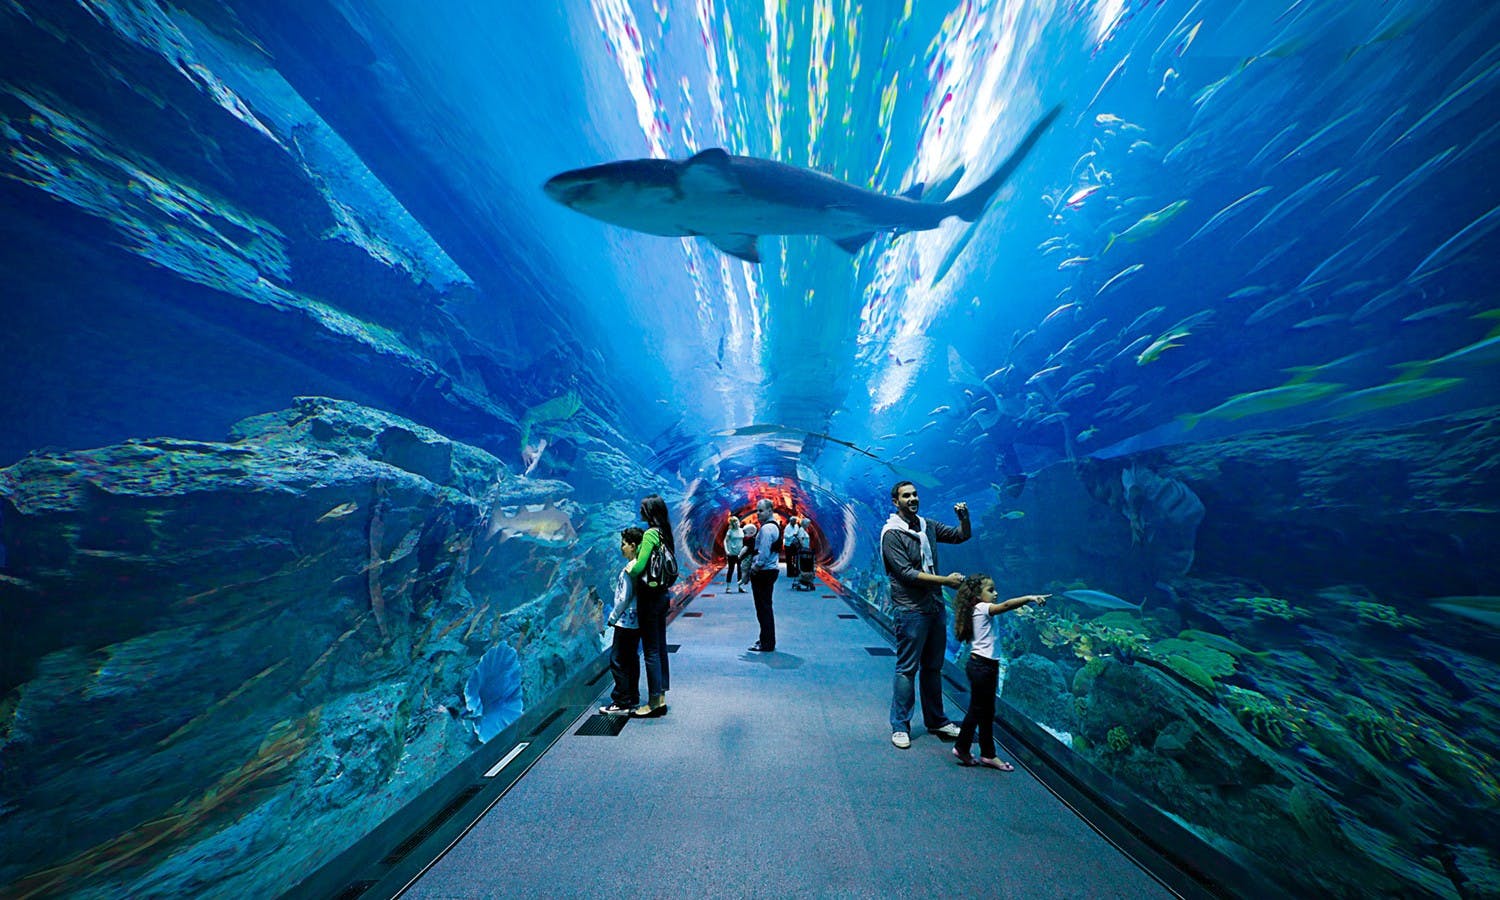 burj khalifa - tickets - dubai aquarium - tunnel - shark